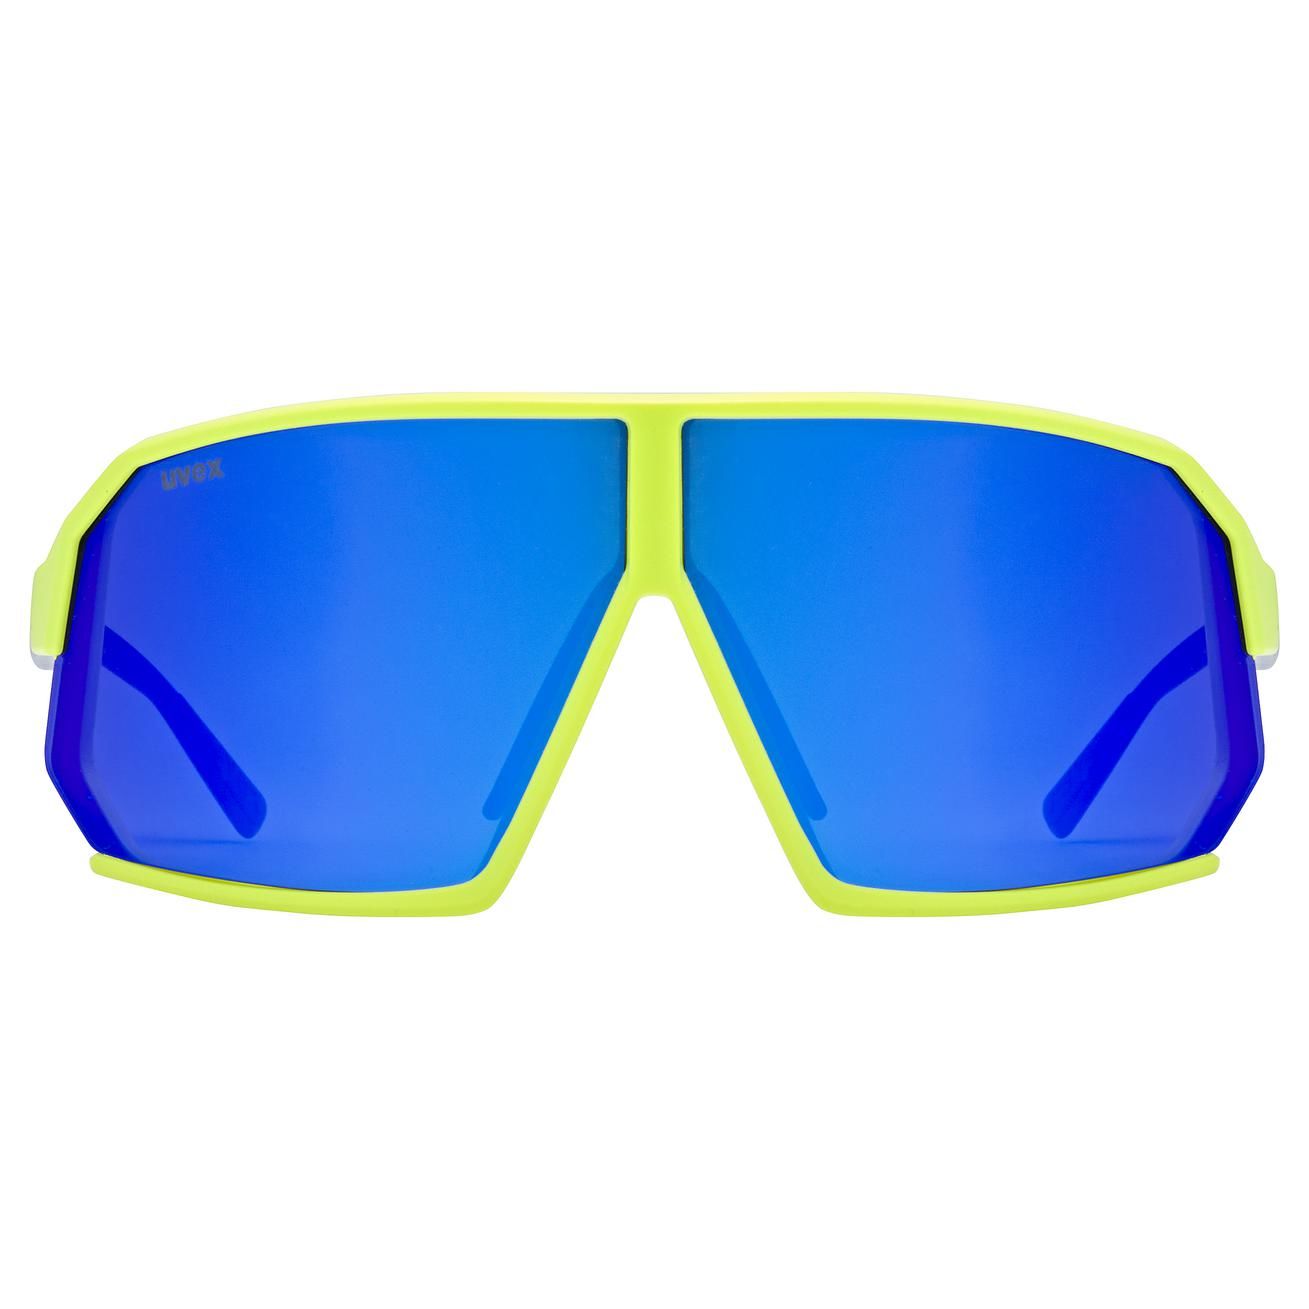 slnečné okuliare uvex sportstyle 237 yellow blue matt/blue